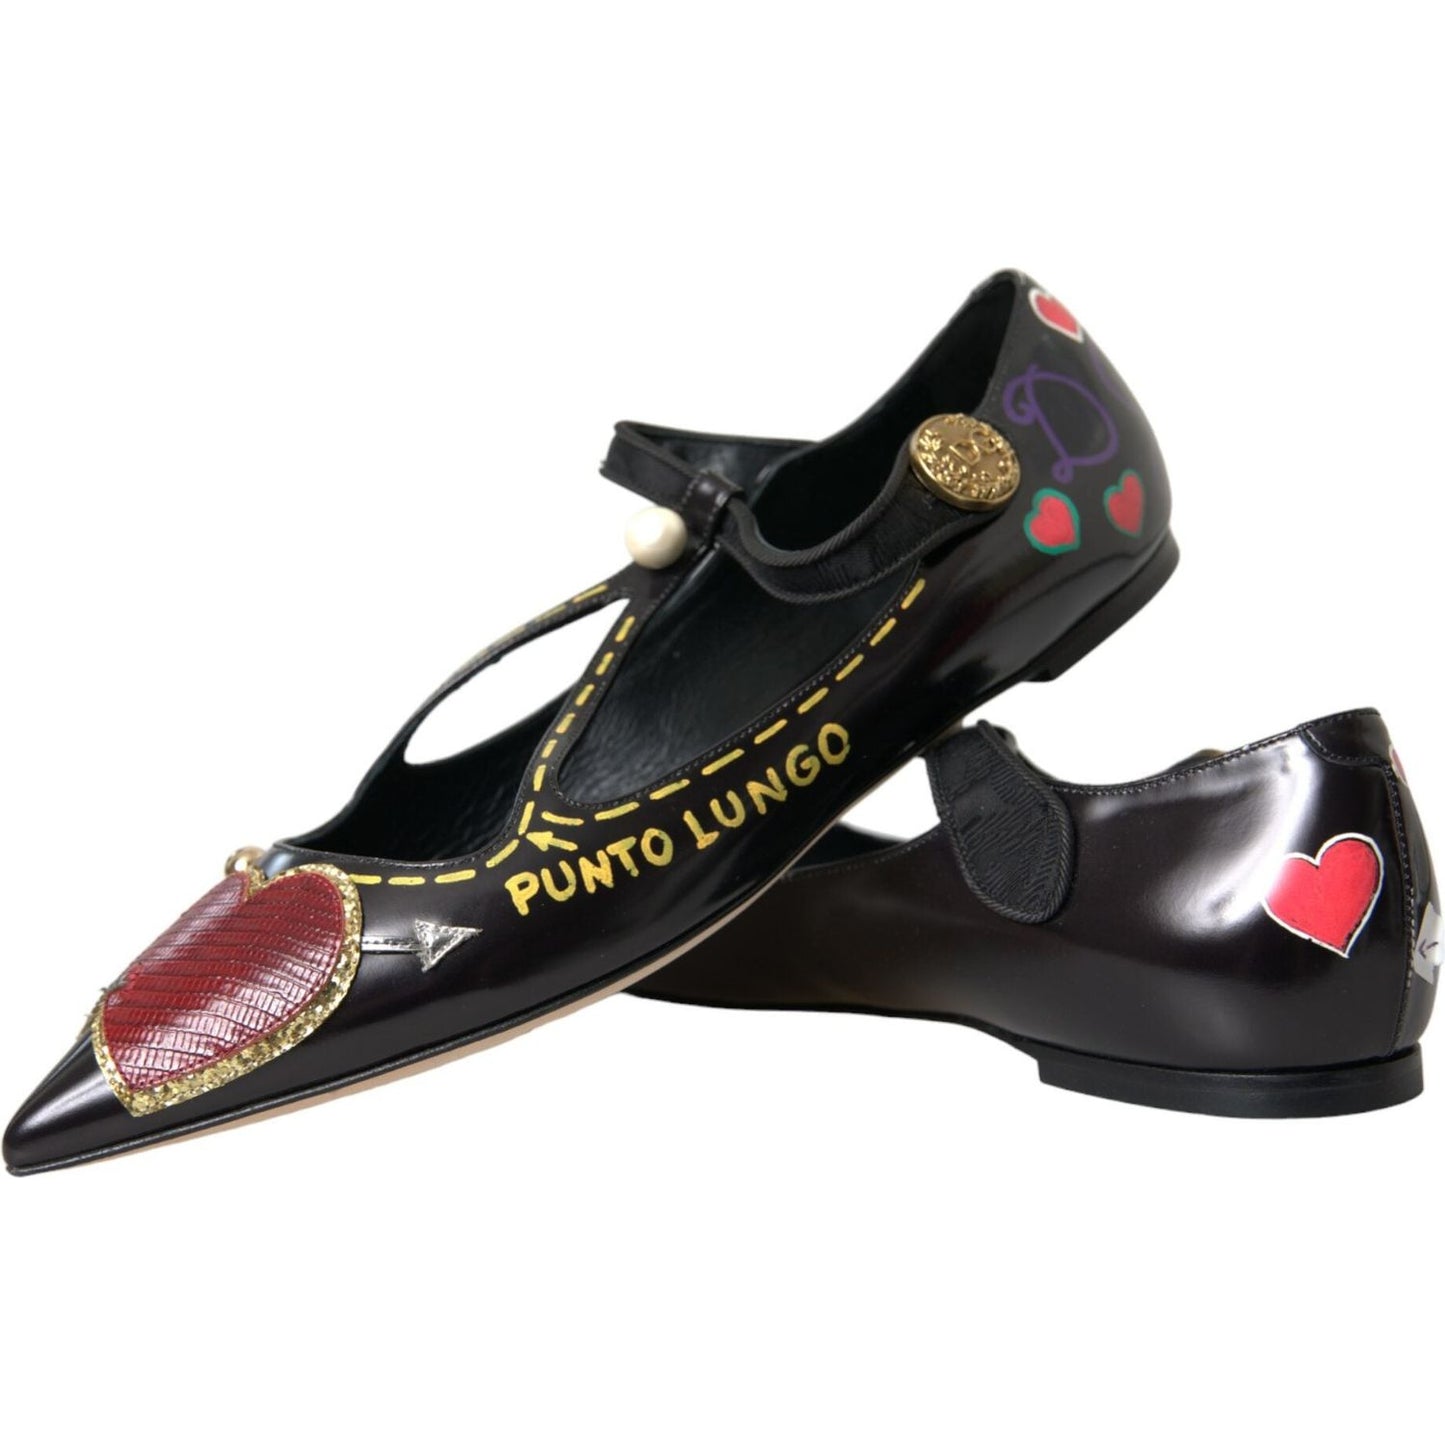 Dolce & Gabbana Black Leather Heart Embellished Loafers Shoes black-leather-heart-embellished-loafers-shoes